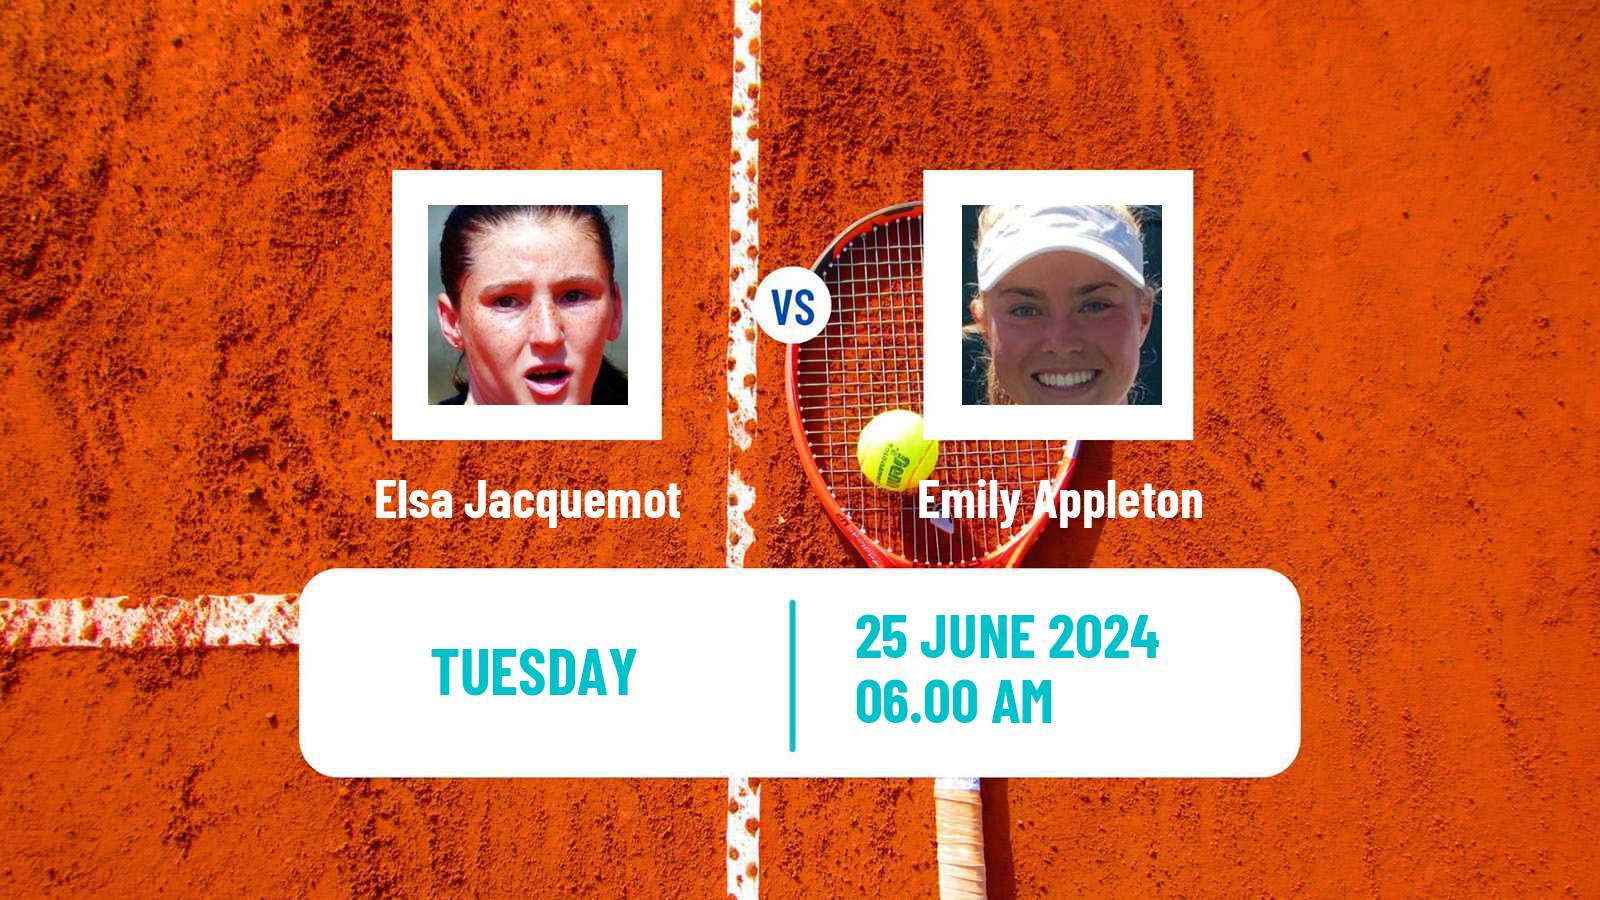 Tennis WTA Wimbledon Elsa Jacquemot - Emily Appleton